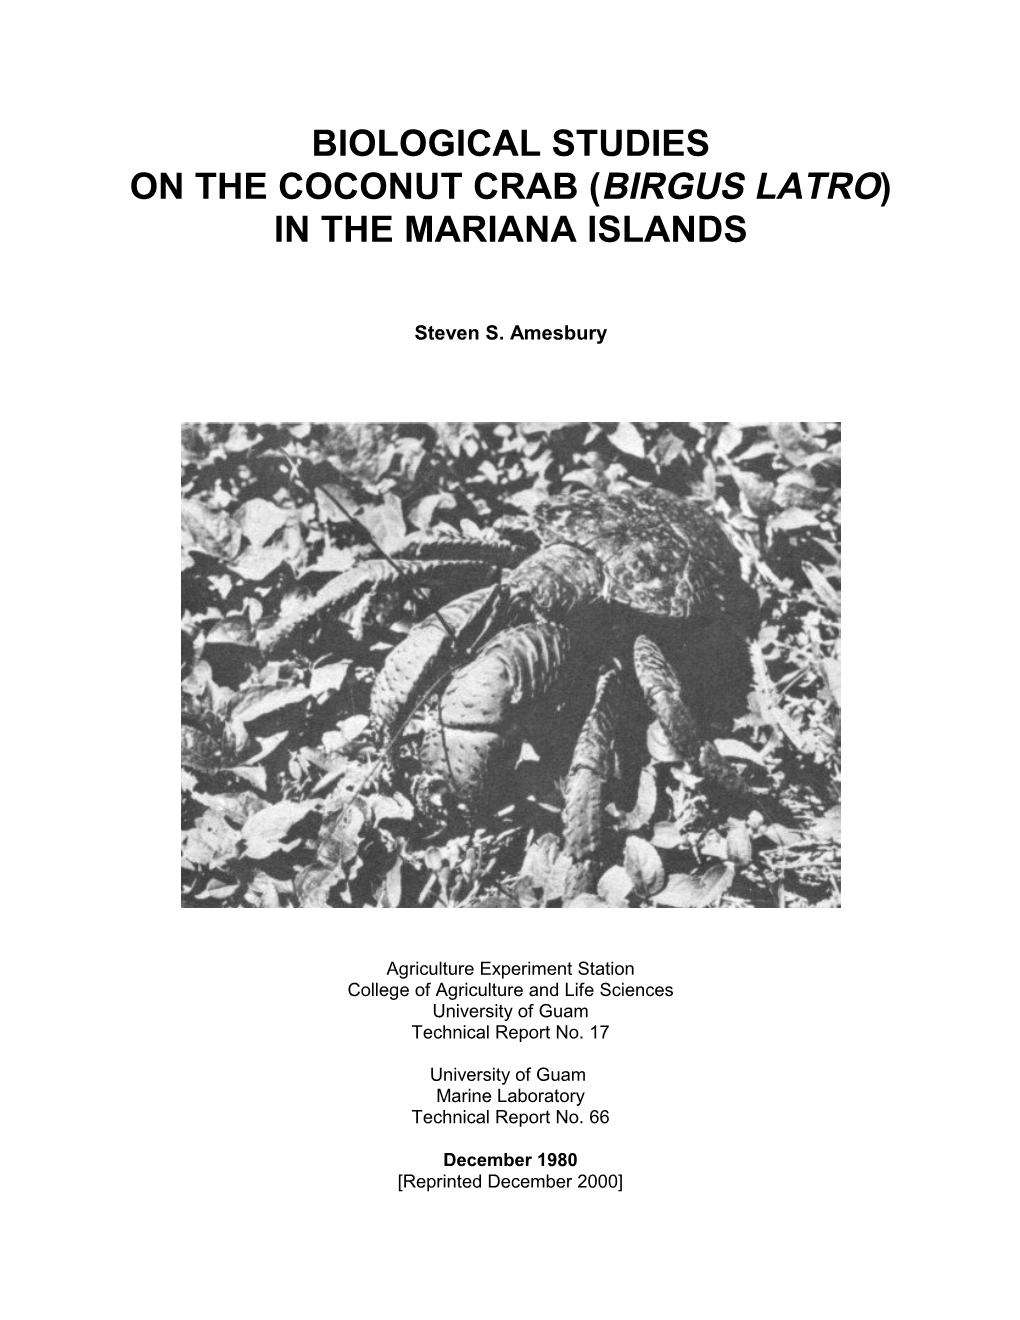 Biological Studies on the Coconut Crab (Birgus Latro) in the Mariana Islands